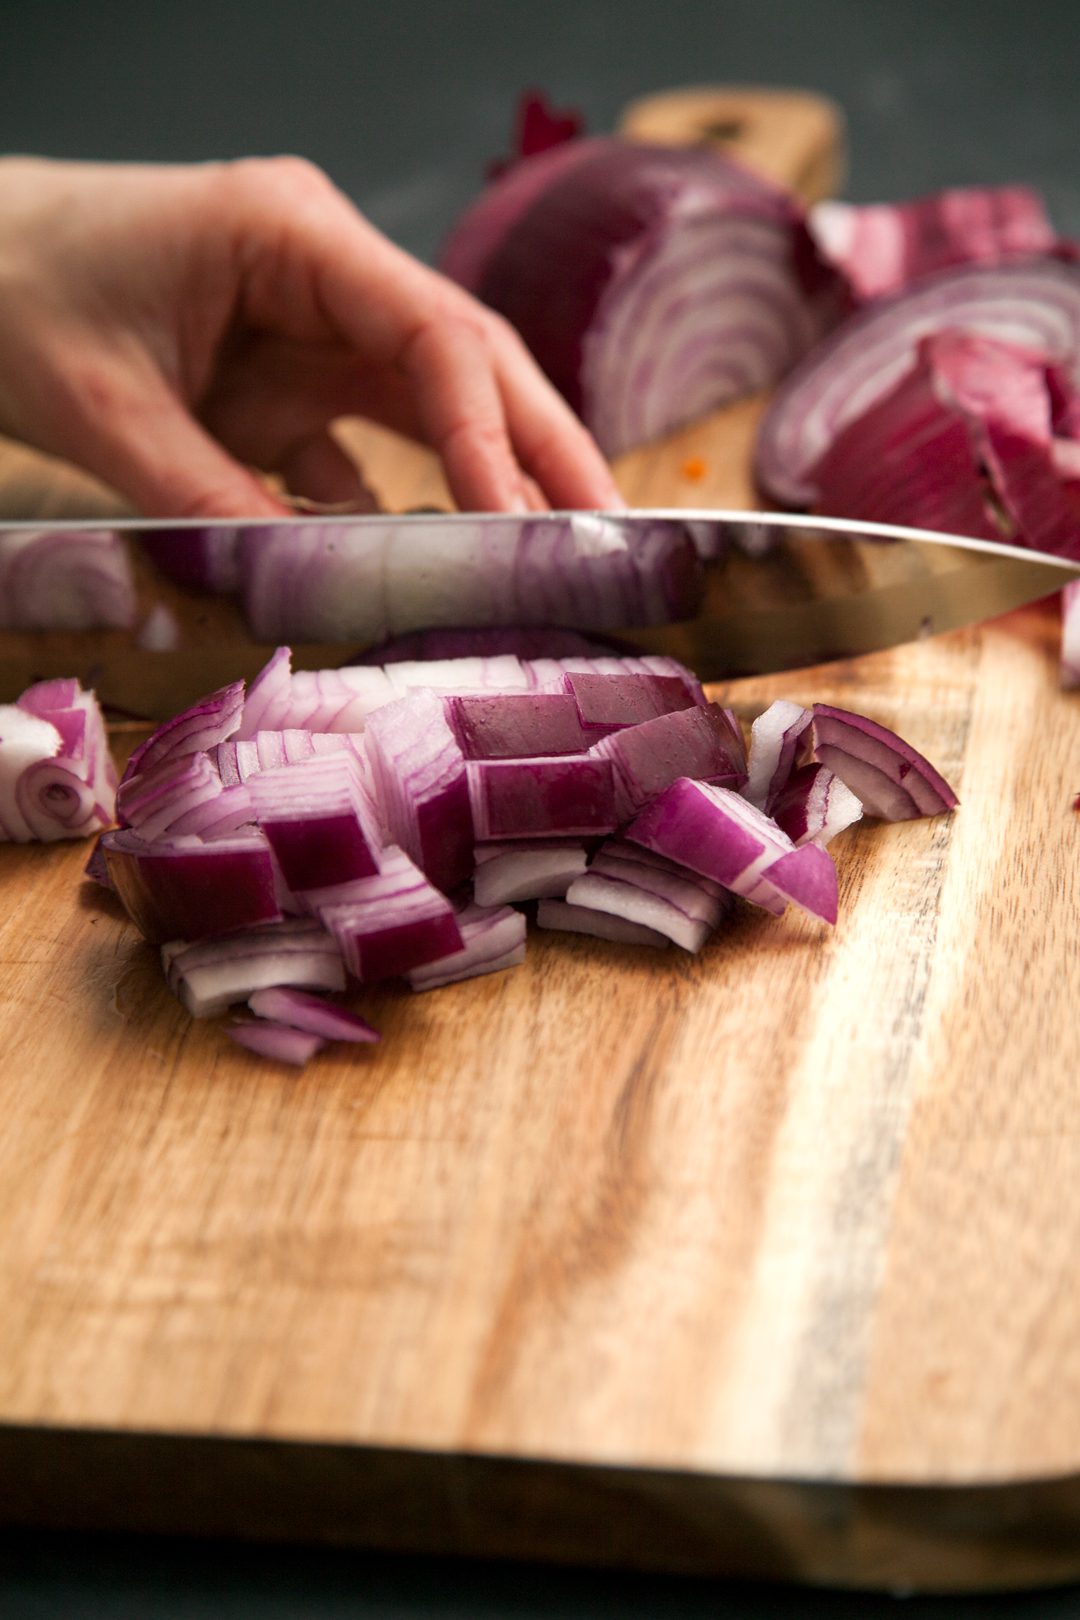 A knife cutting red onions on a cutting board.